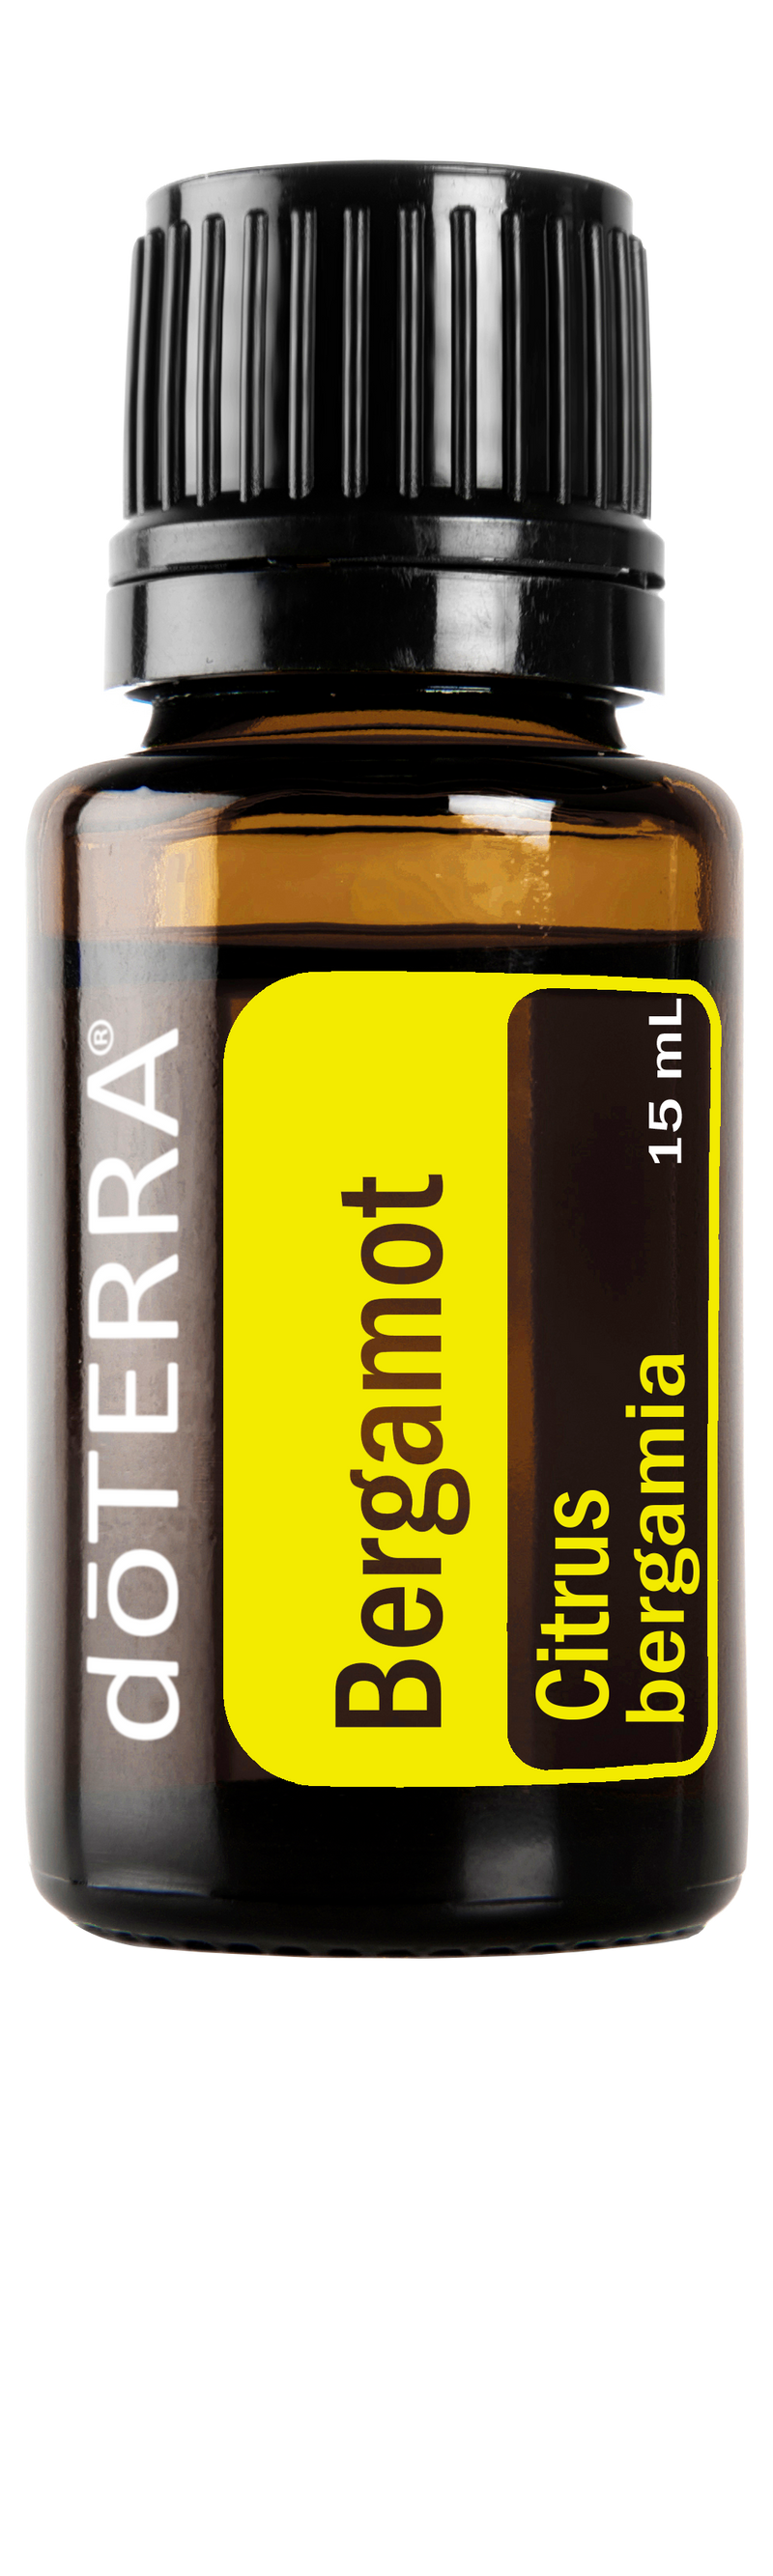 BERGAMOT OIL - dōTERRA Essential Oils